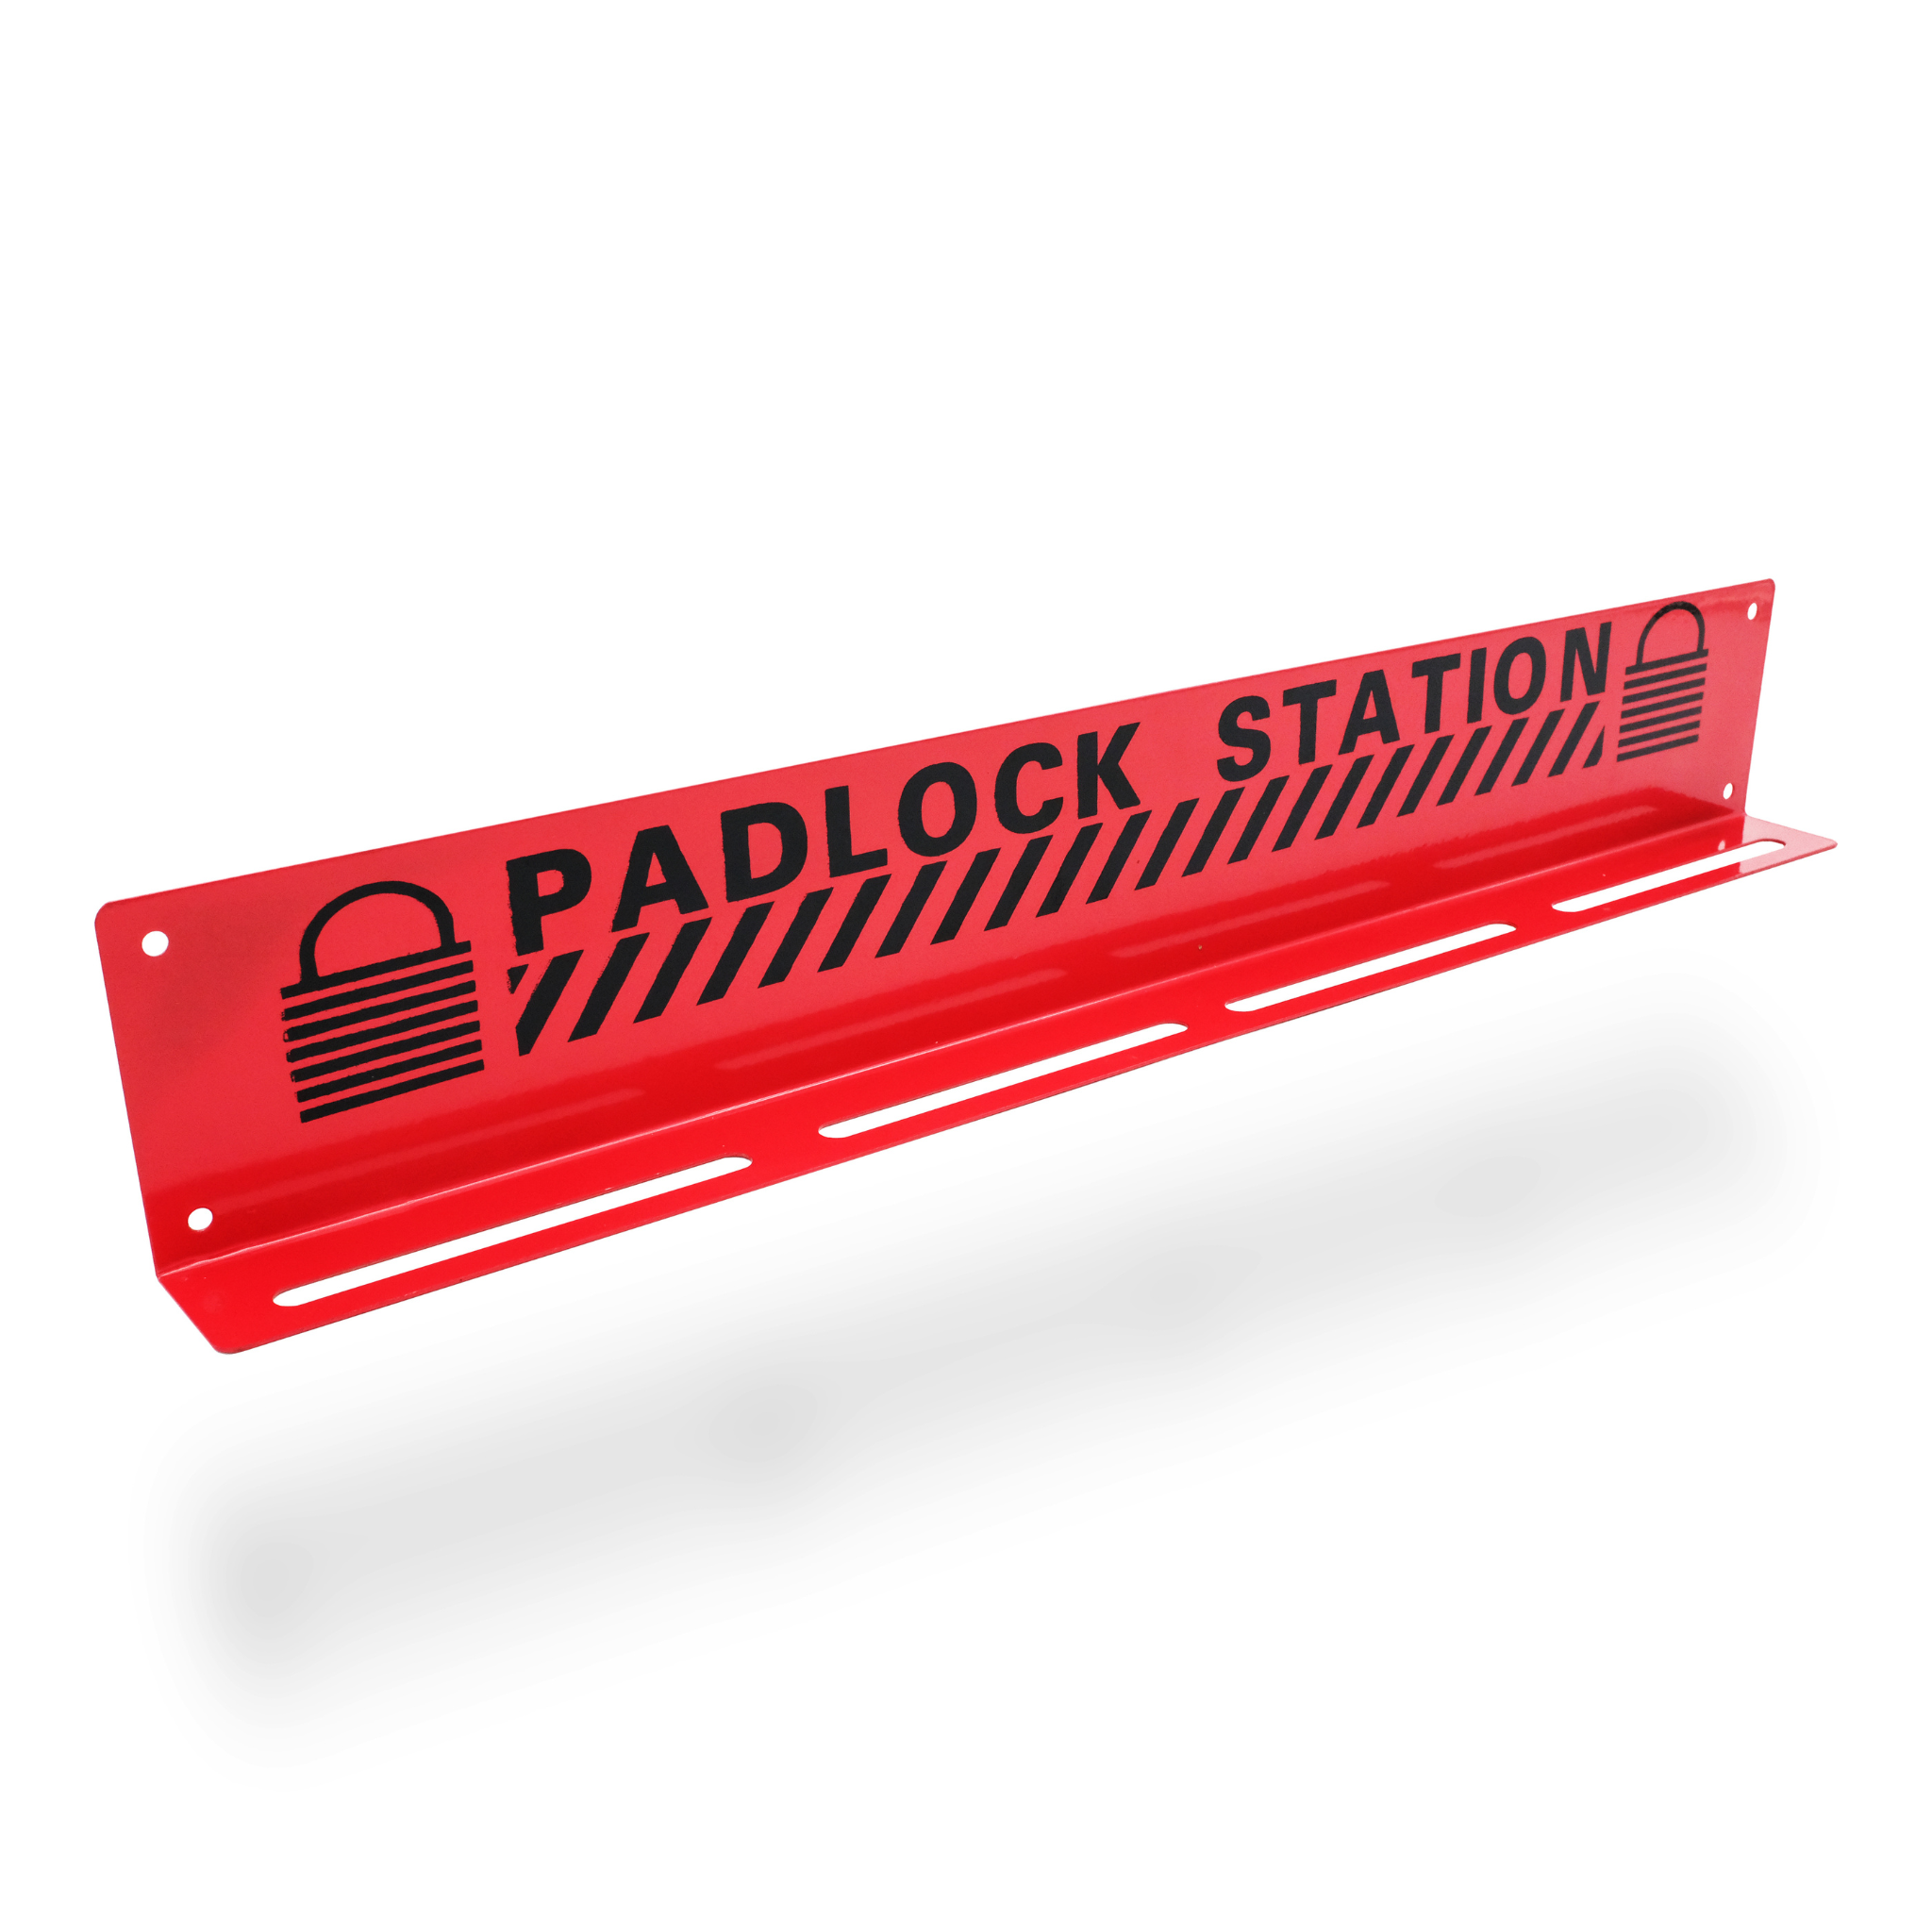 Safety Padlock Lockout Tagout Station - Fits 20 Padlocks – LOTO Locks Not Included